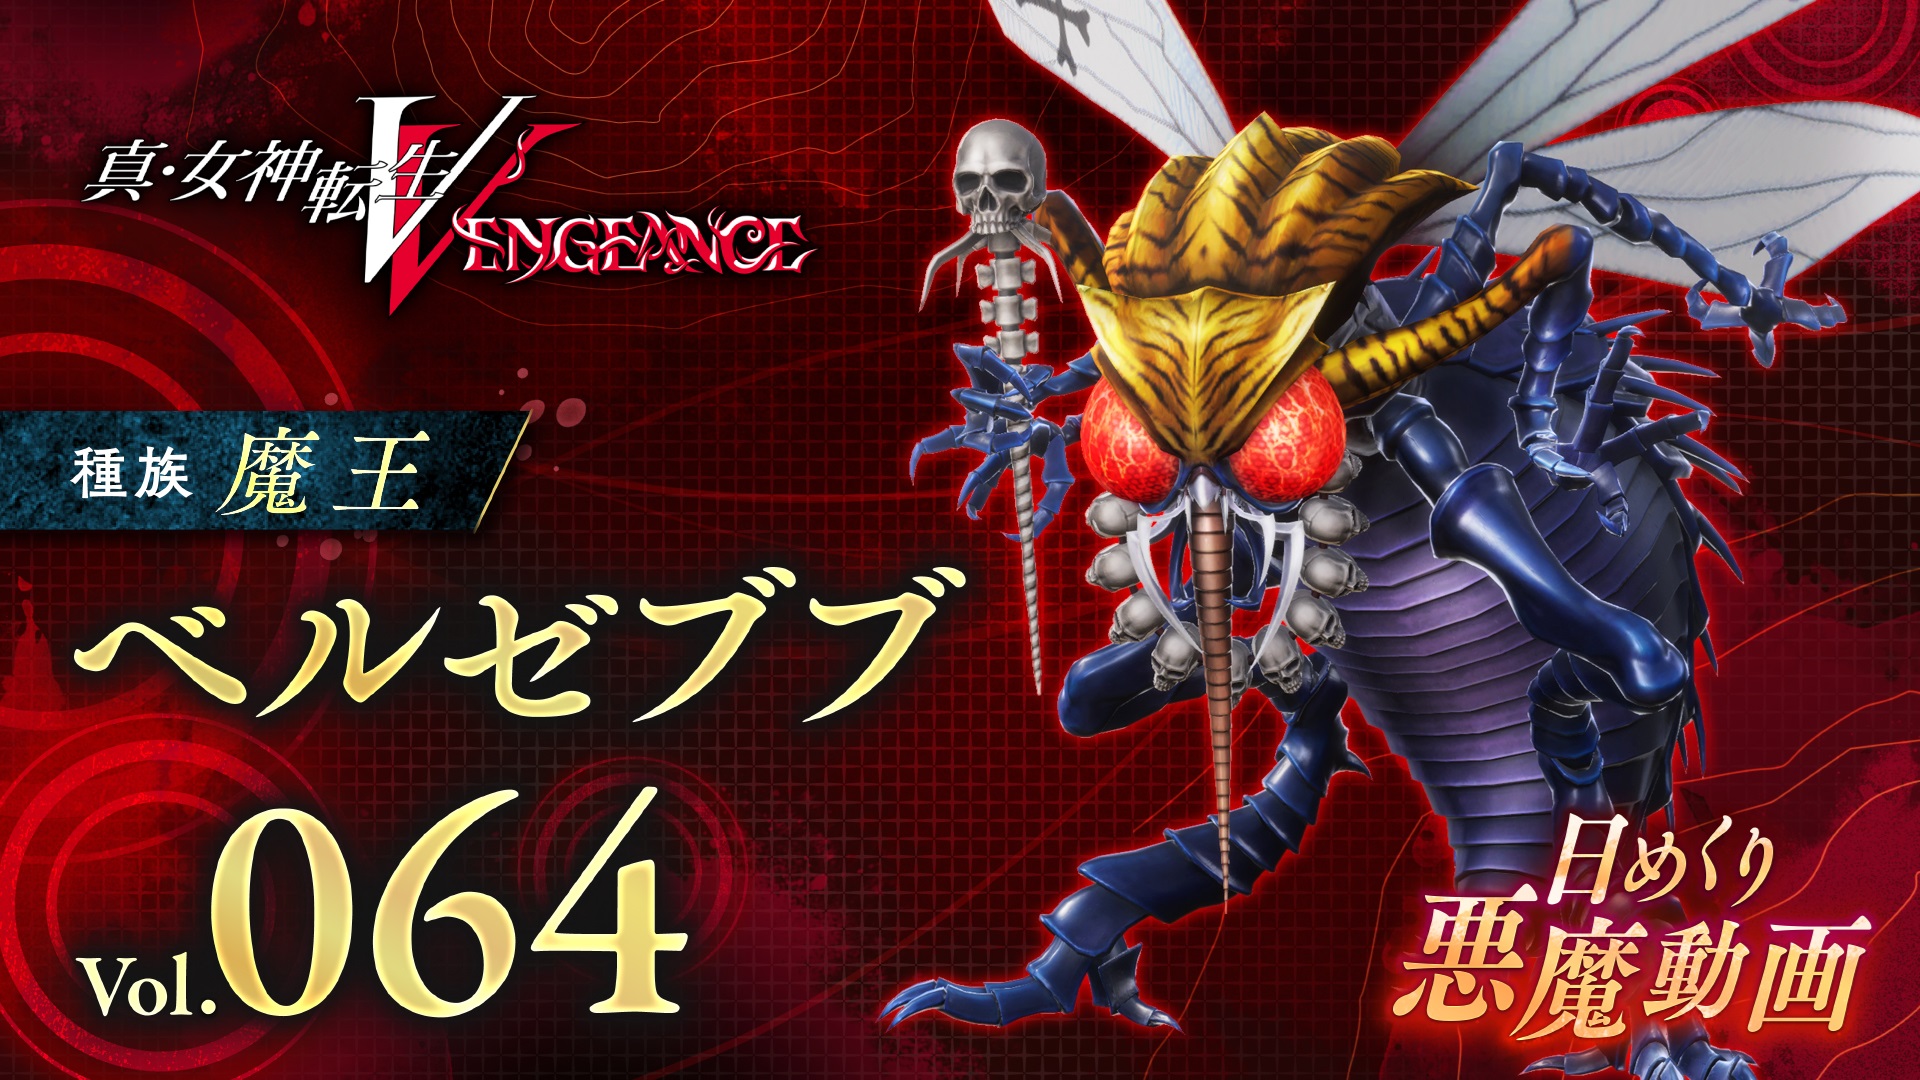 Shin Megami Tensei V: Видео Vengeance Daily Demon представляет Вельзевула